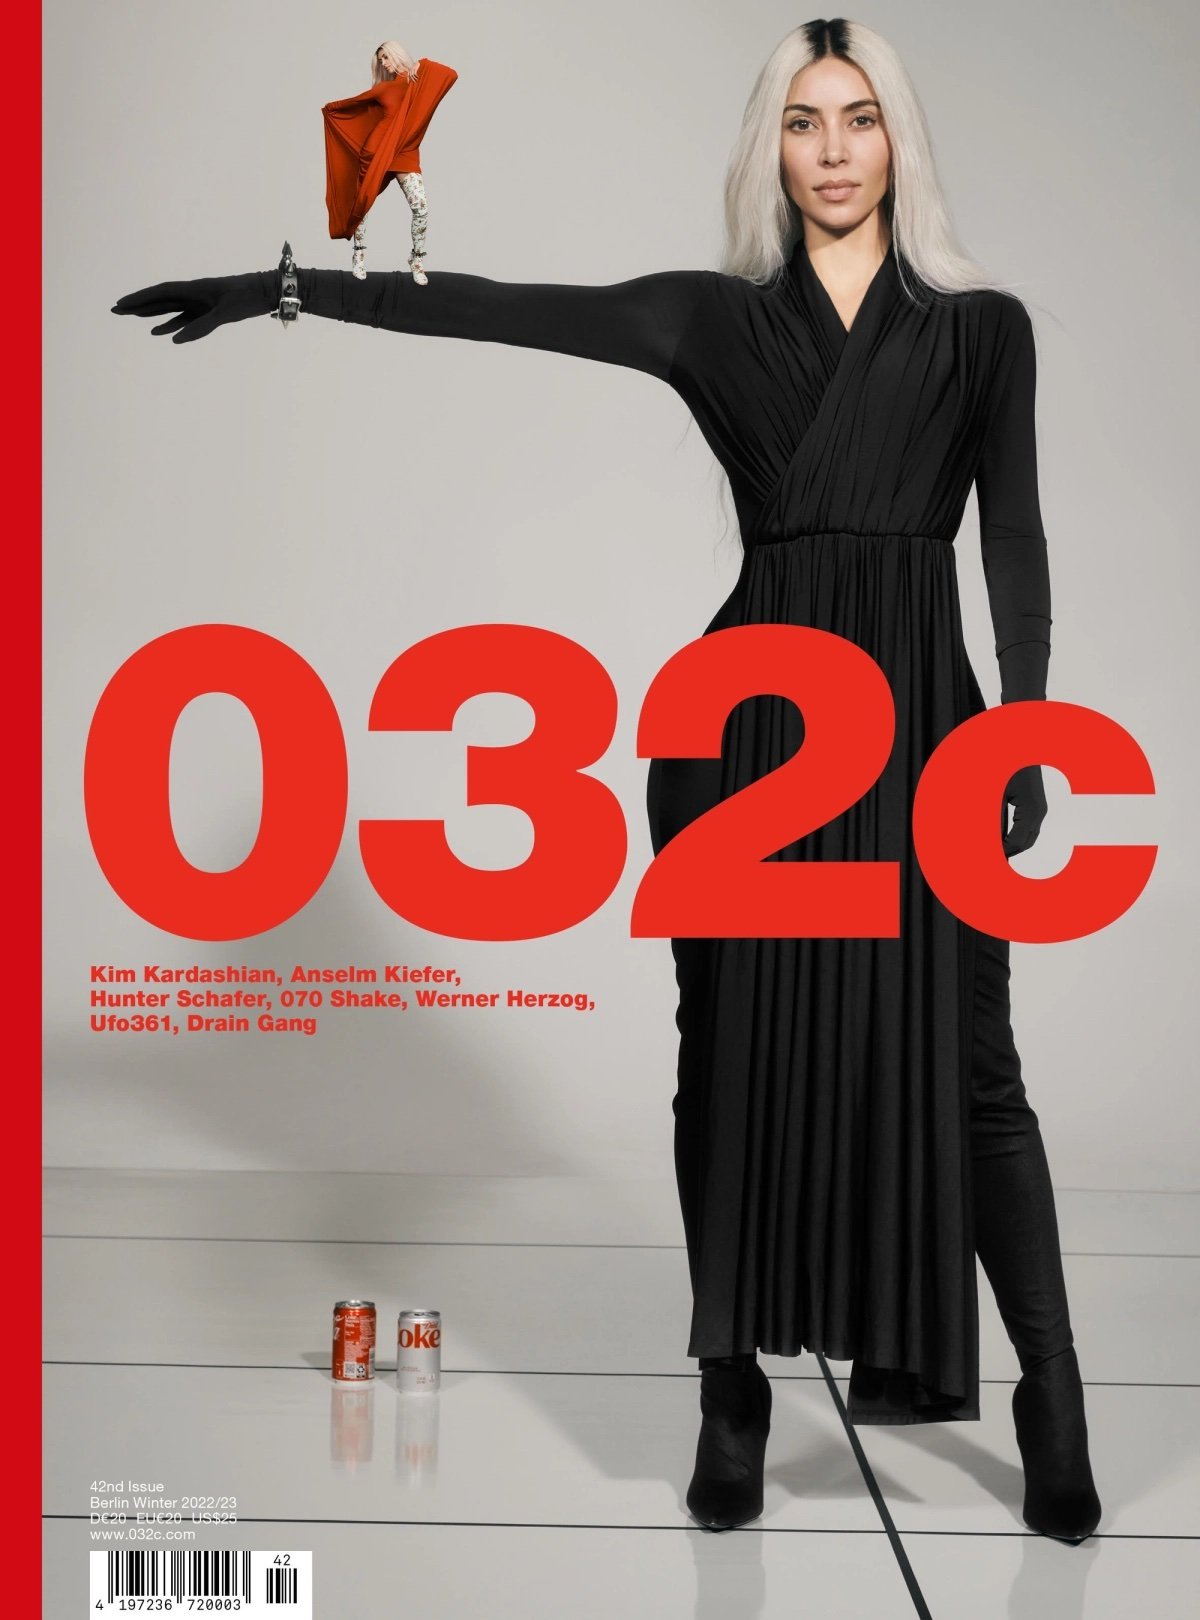 poster advertising Louis Vuitton with Liya Kebede in paper